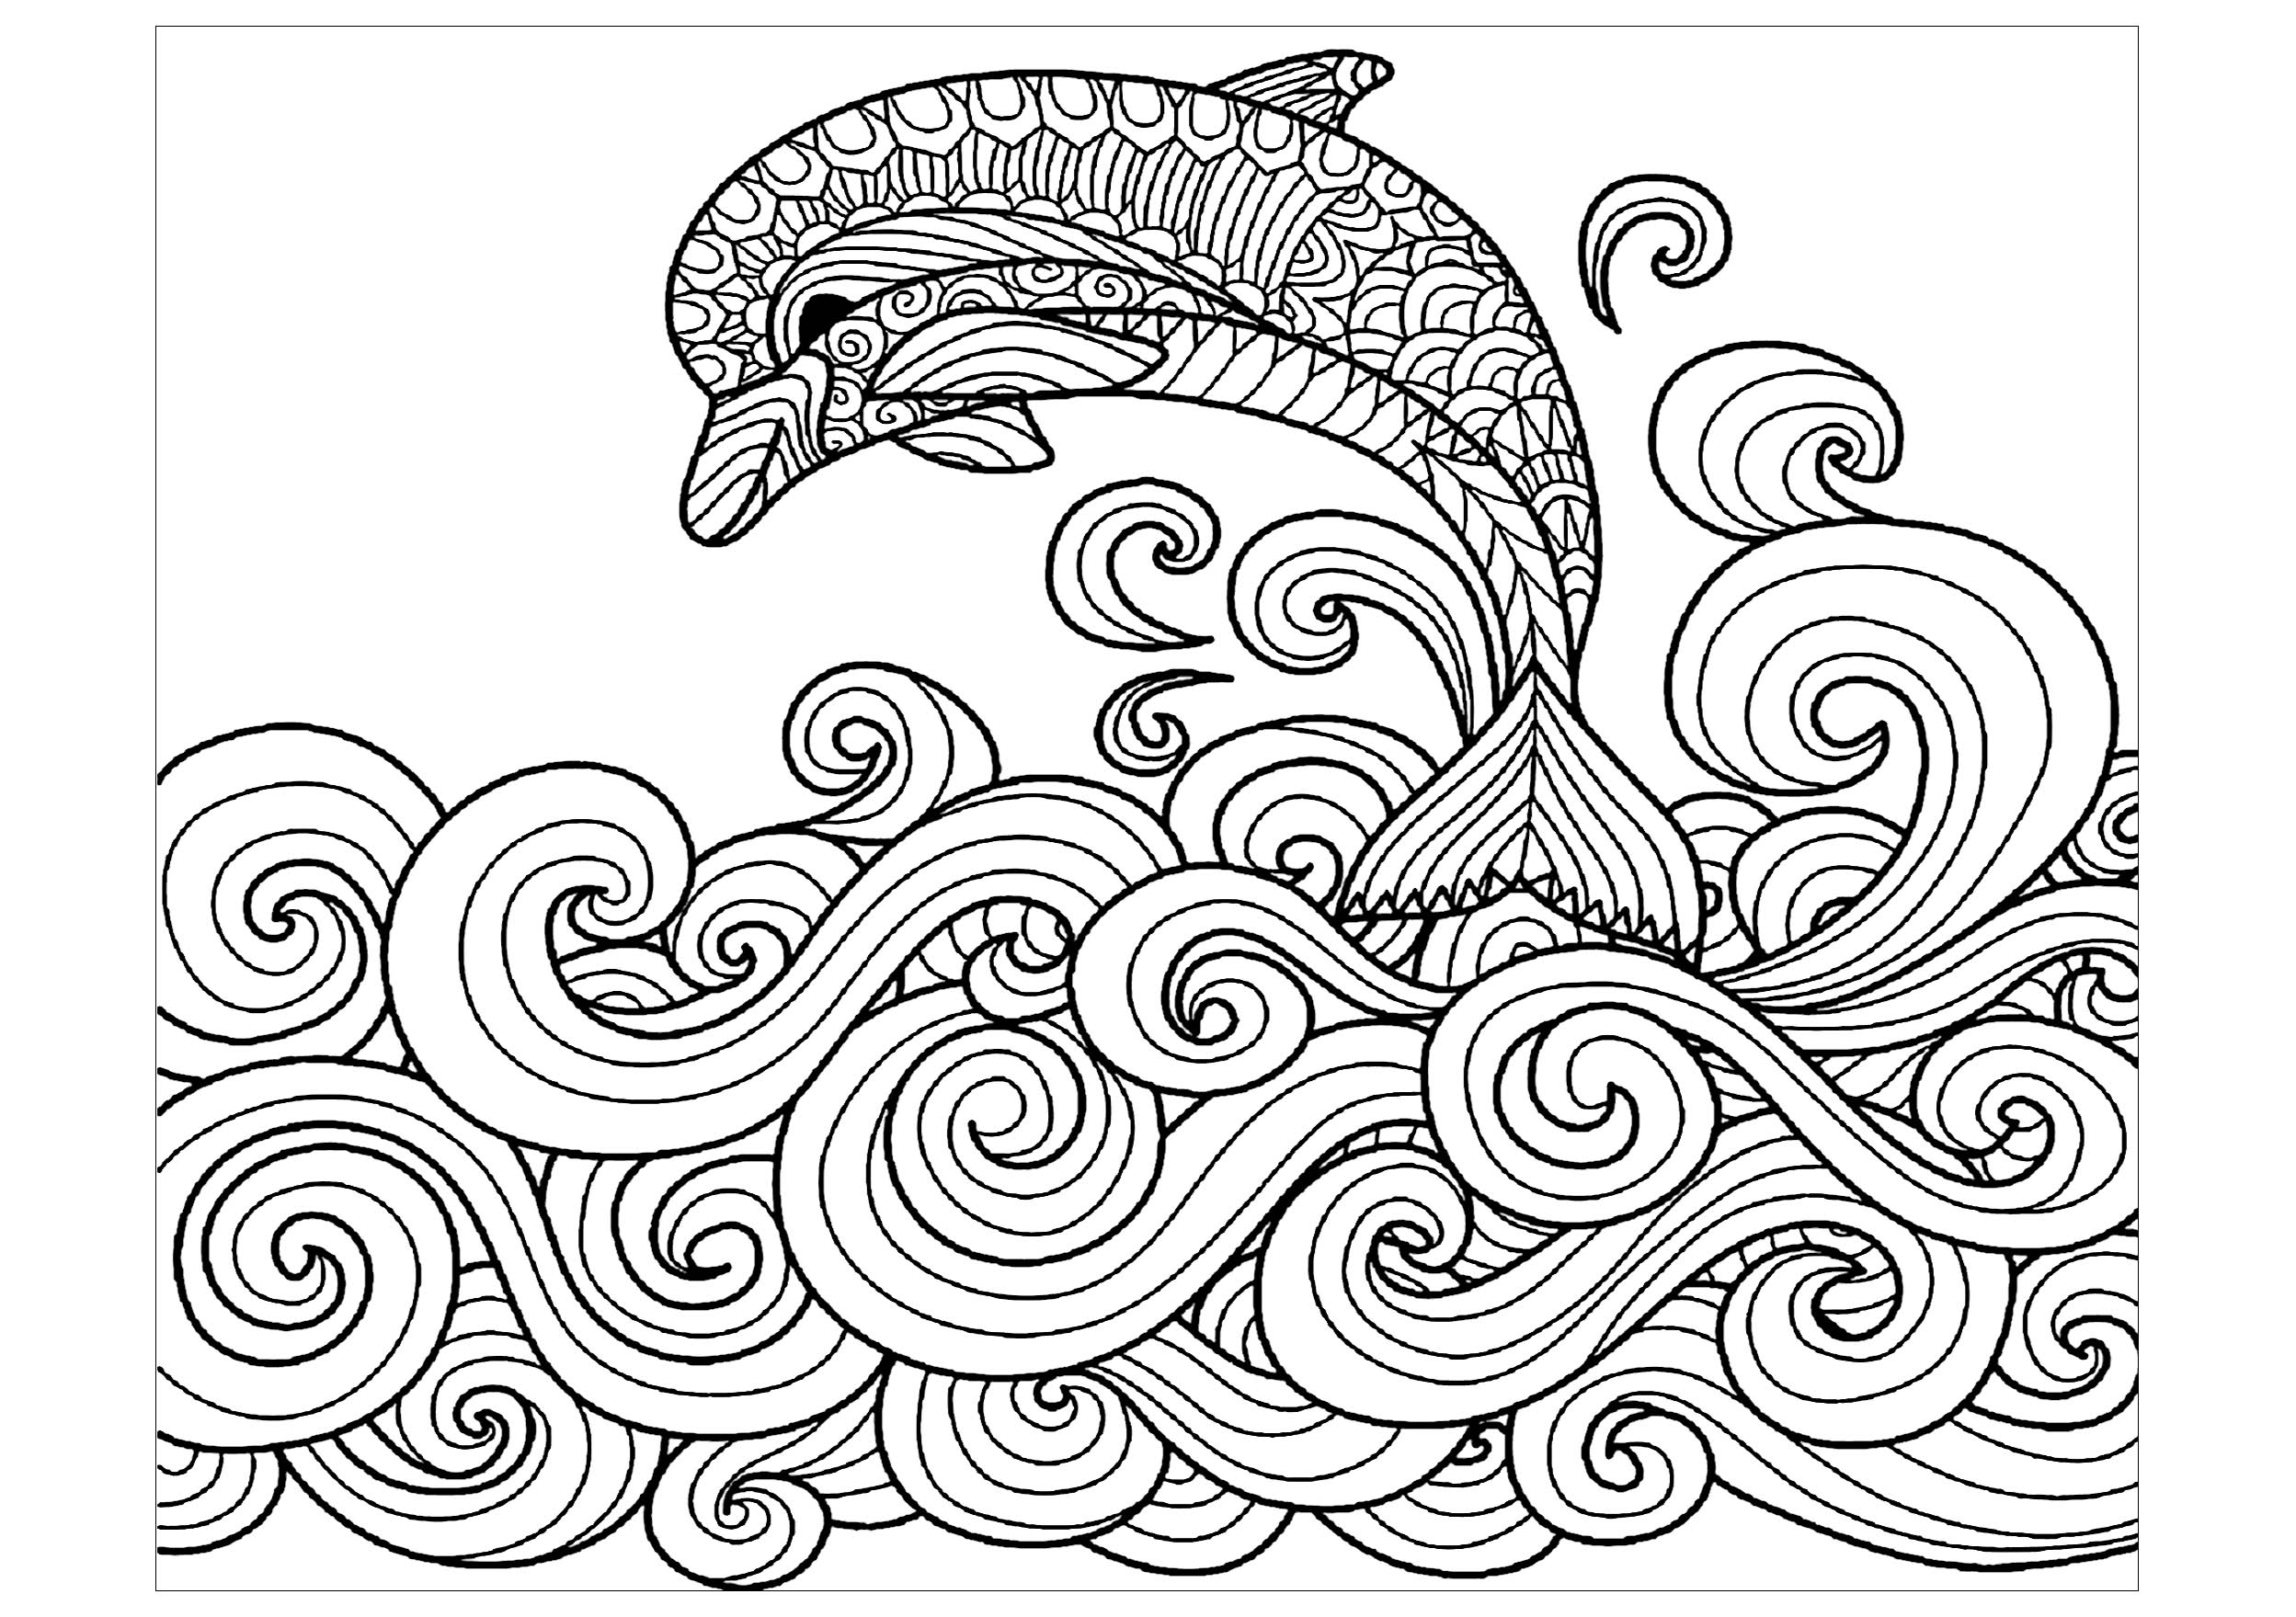 Dauphin avec des vagues simples, Artiste : Bimdeedee   Source : 123rf